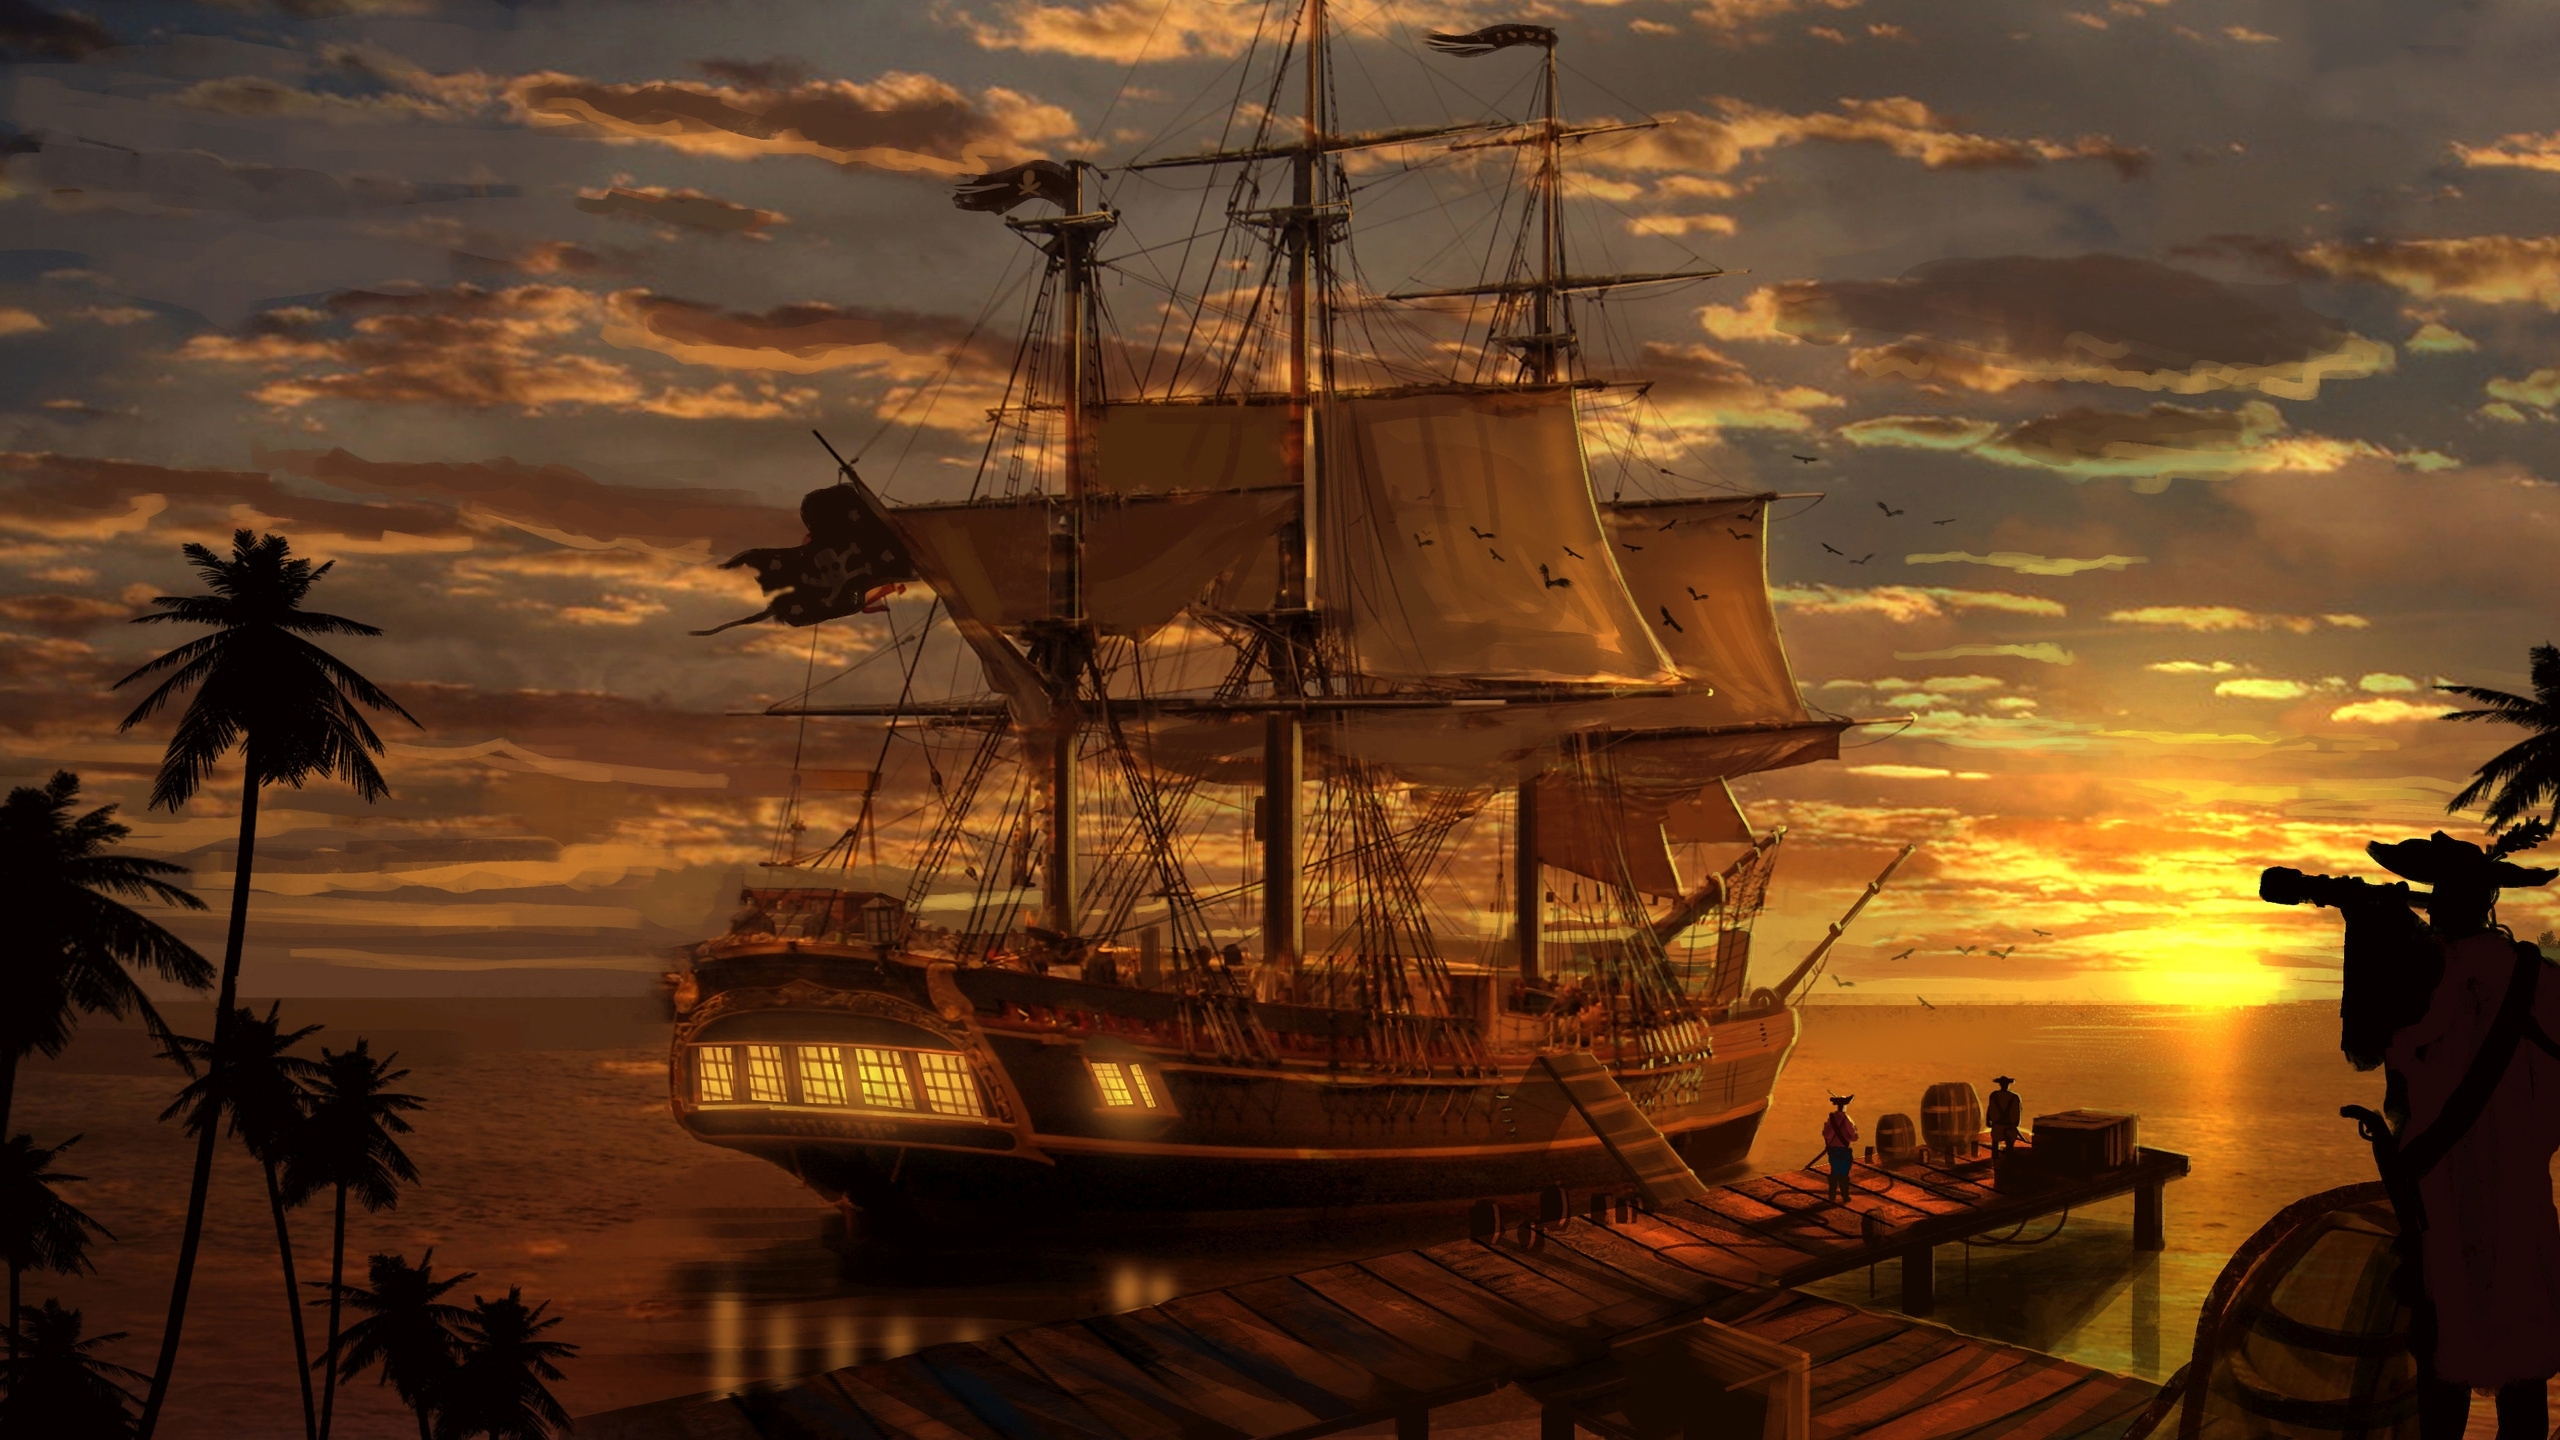 Pirate ship wallpaper 24699